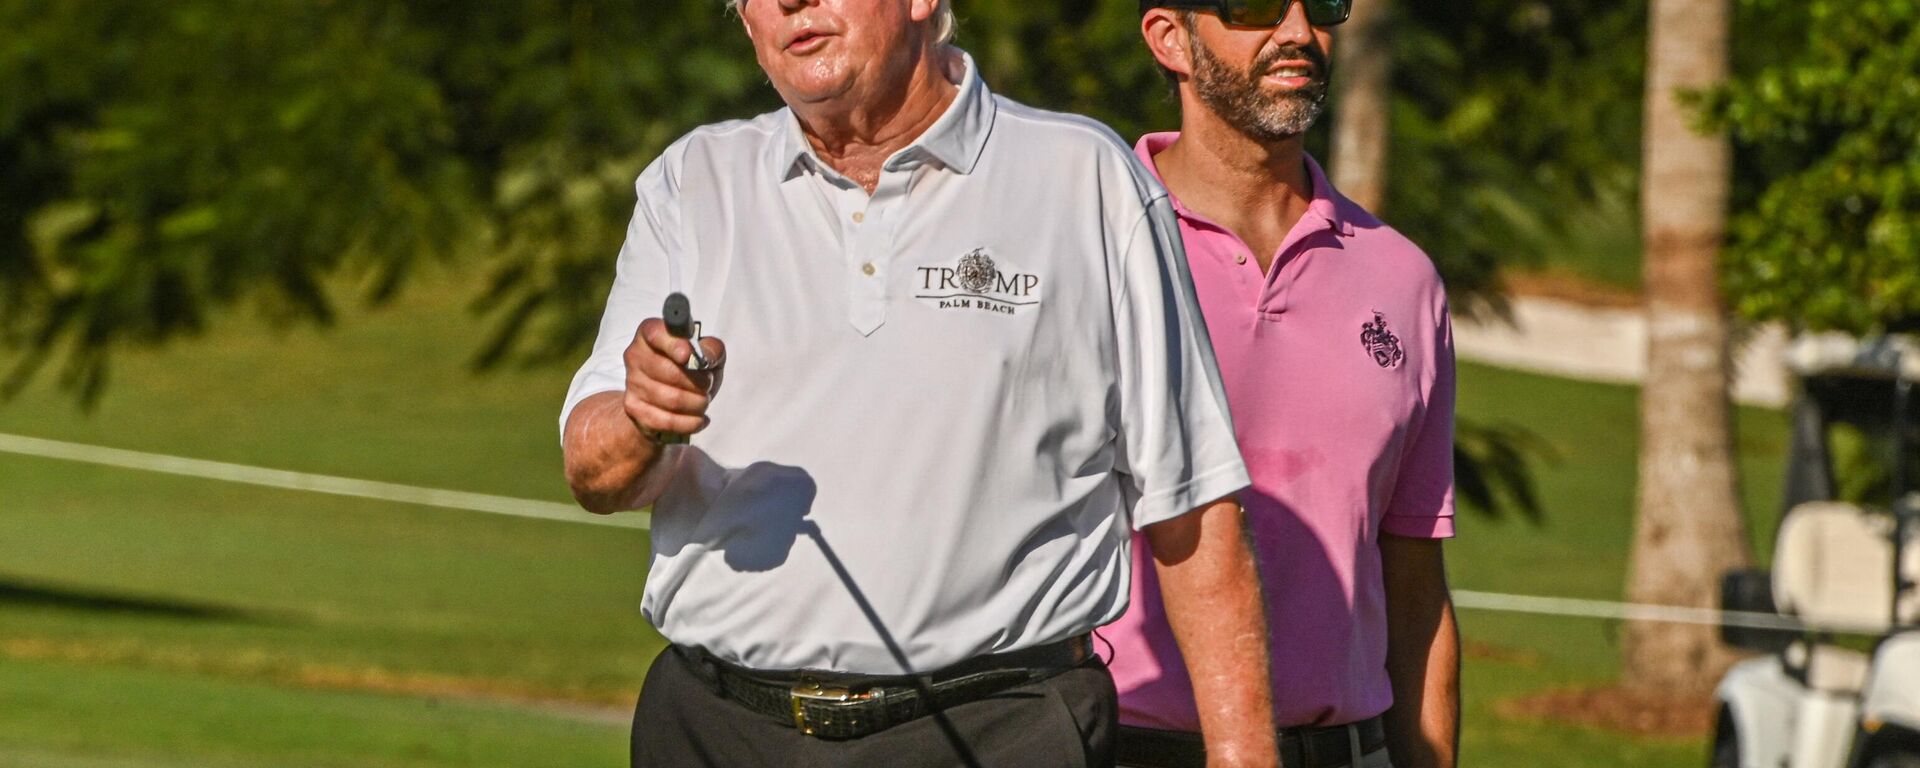 Former US President Donald Trump and his son, Donald Trump, Jr., play golf at Trump National Doral Miami golf club on October 27, 2022 in Miami, Florida - Sputnik International, 1920, 31.03.2023